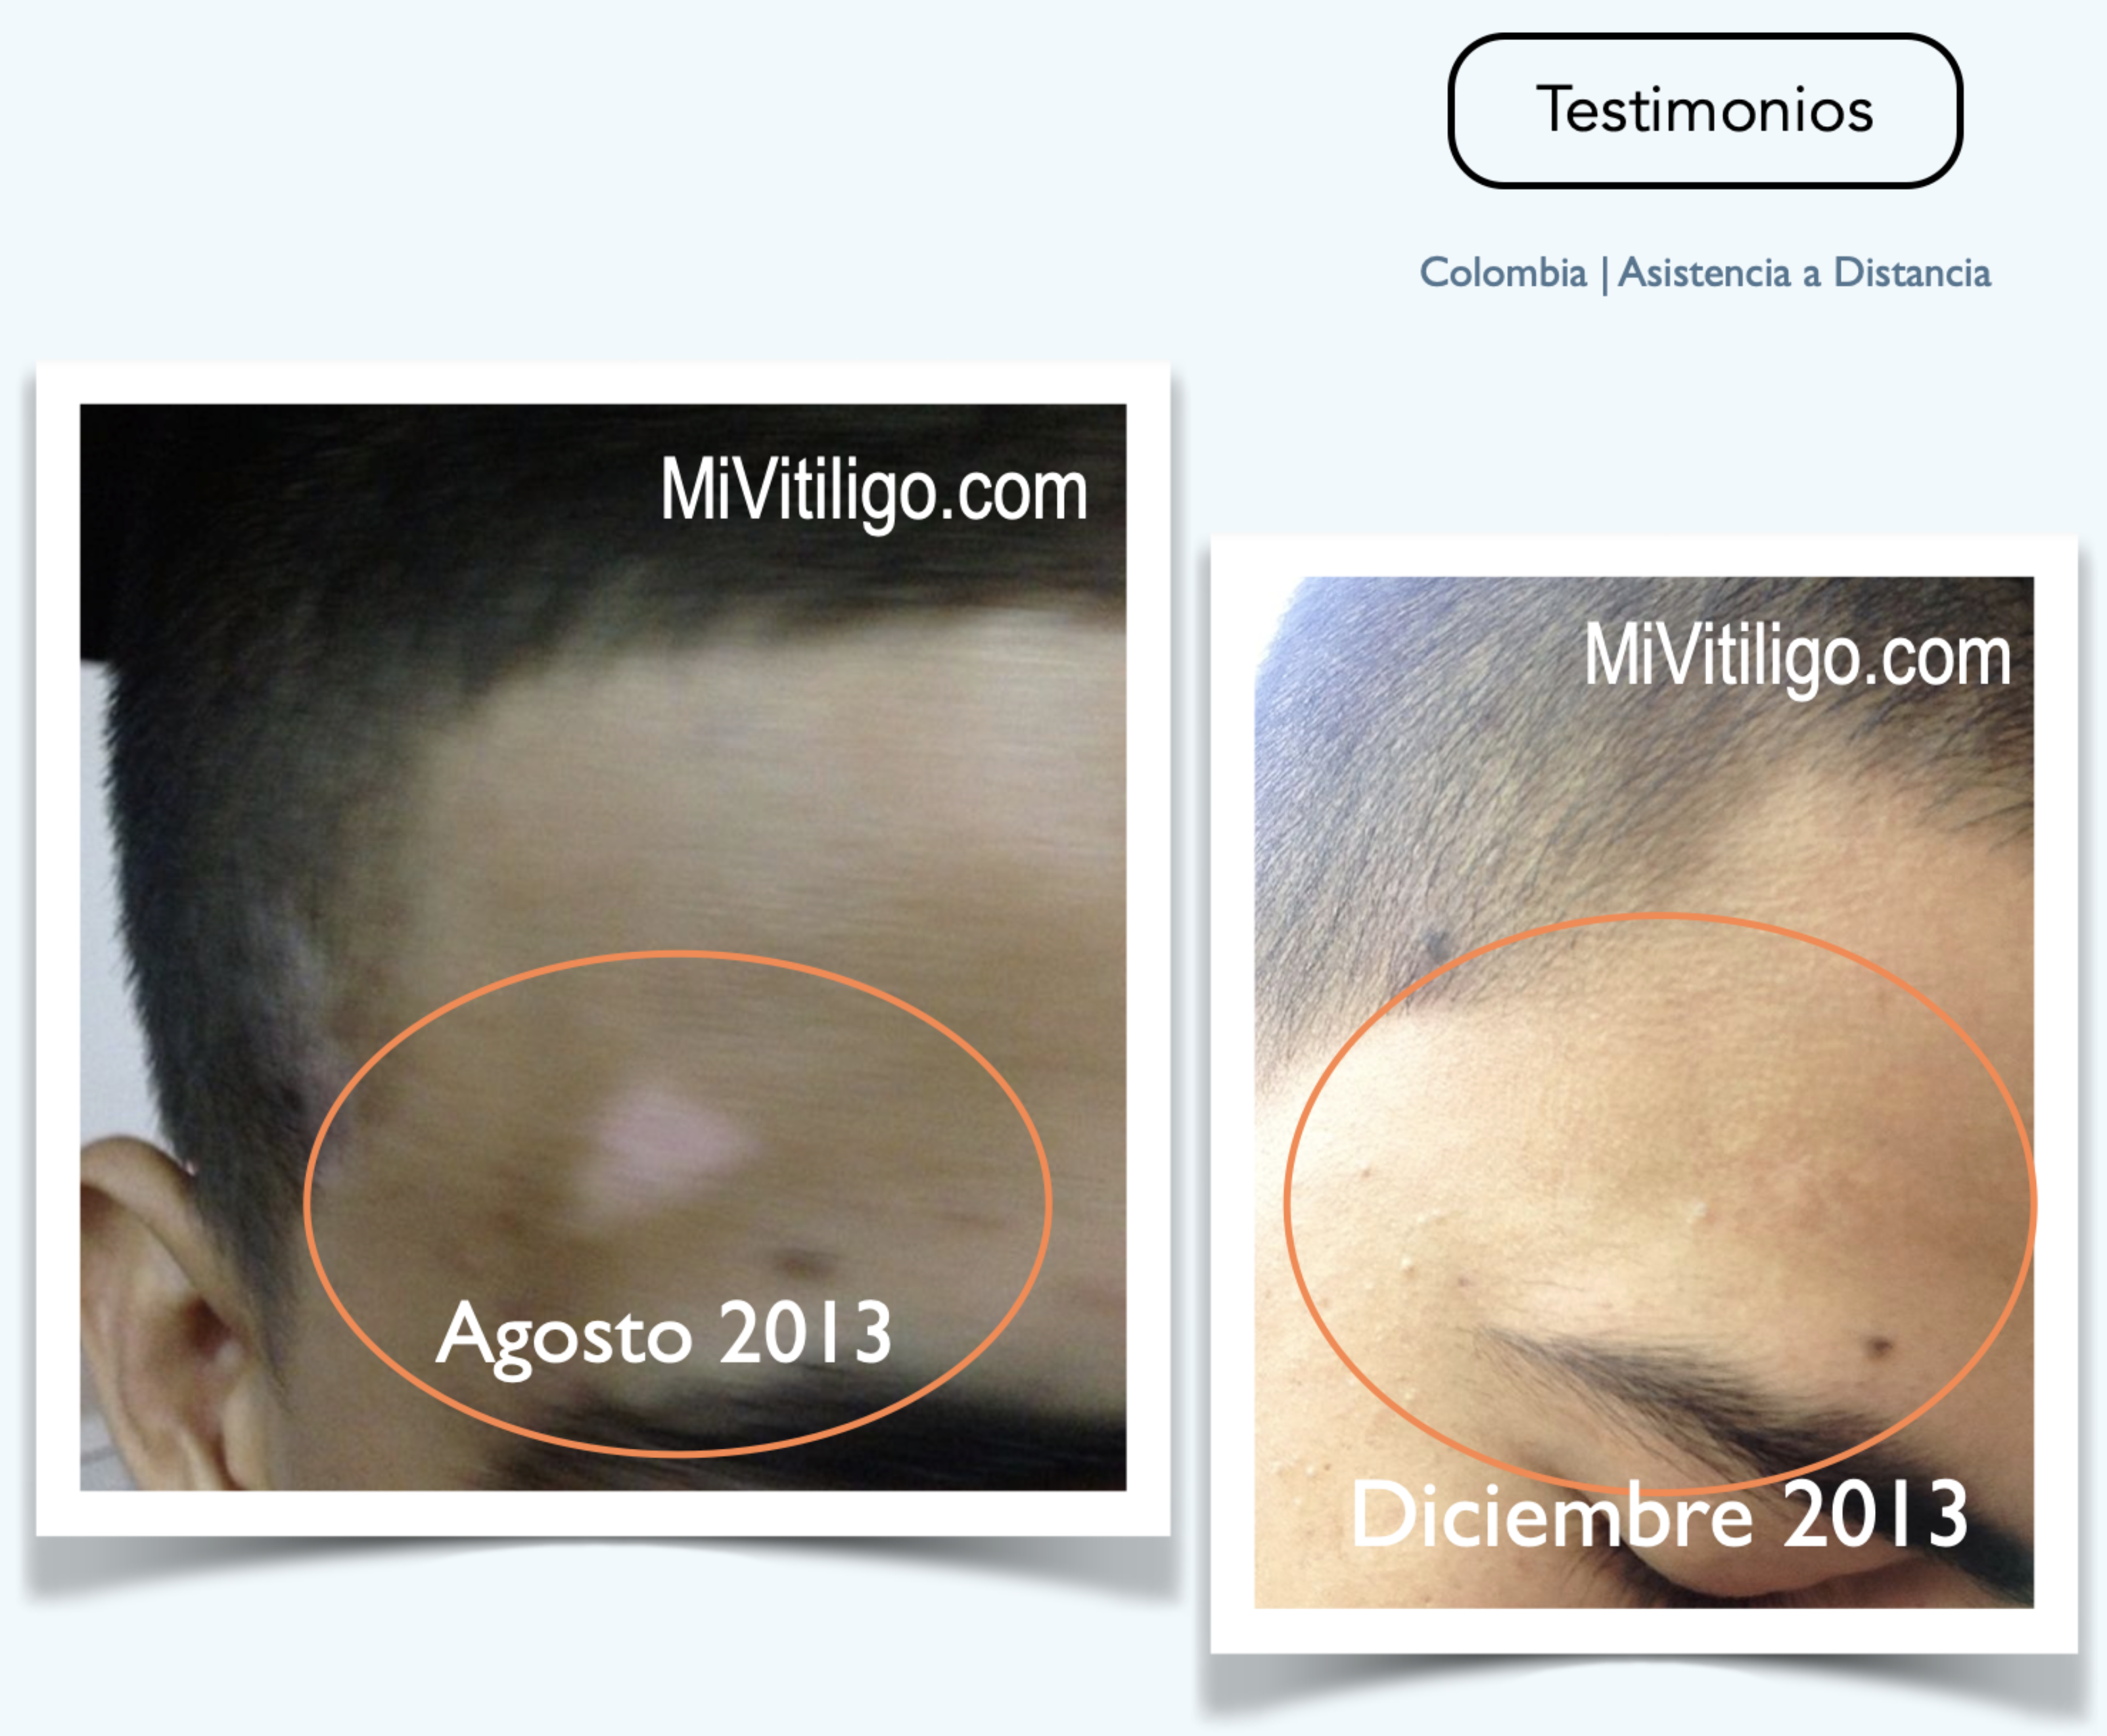 testimonios_libro_evitando_y_controlando_vitiligo_12.png